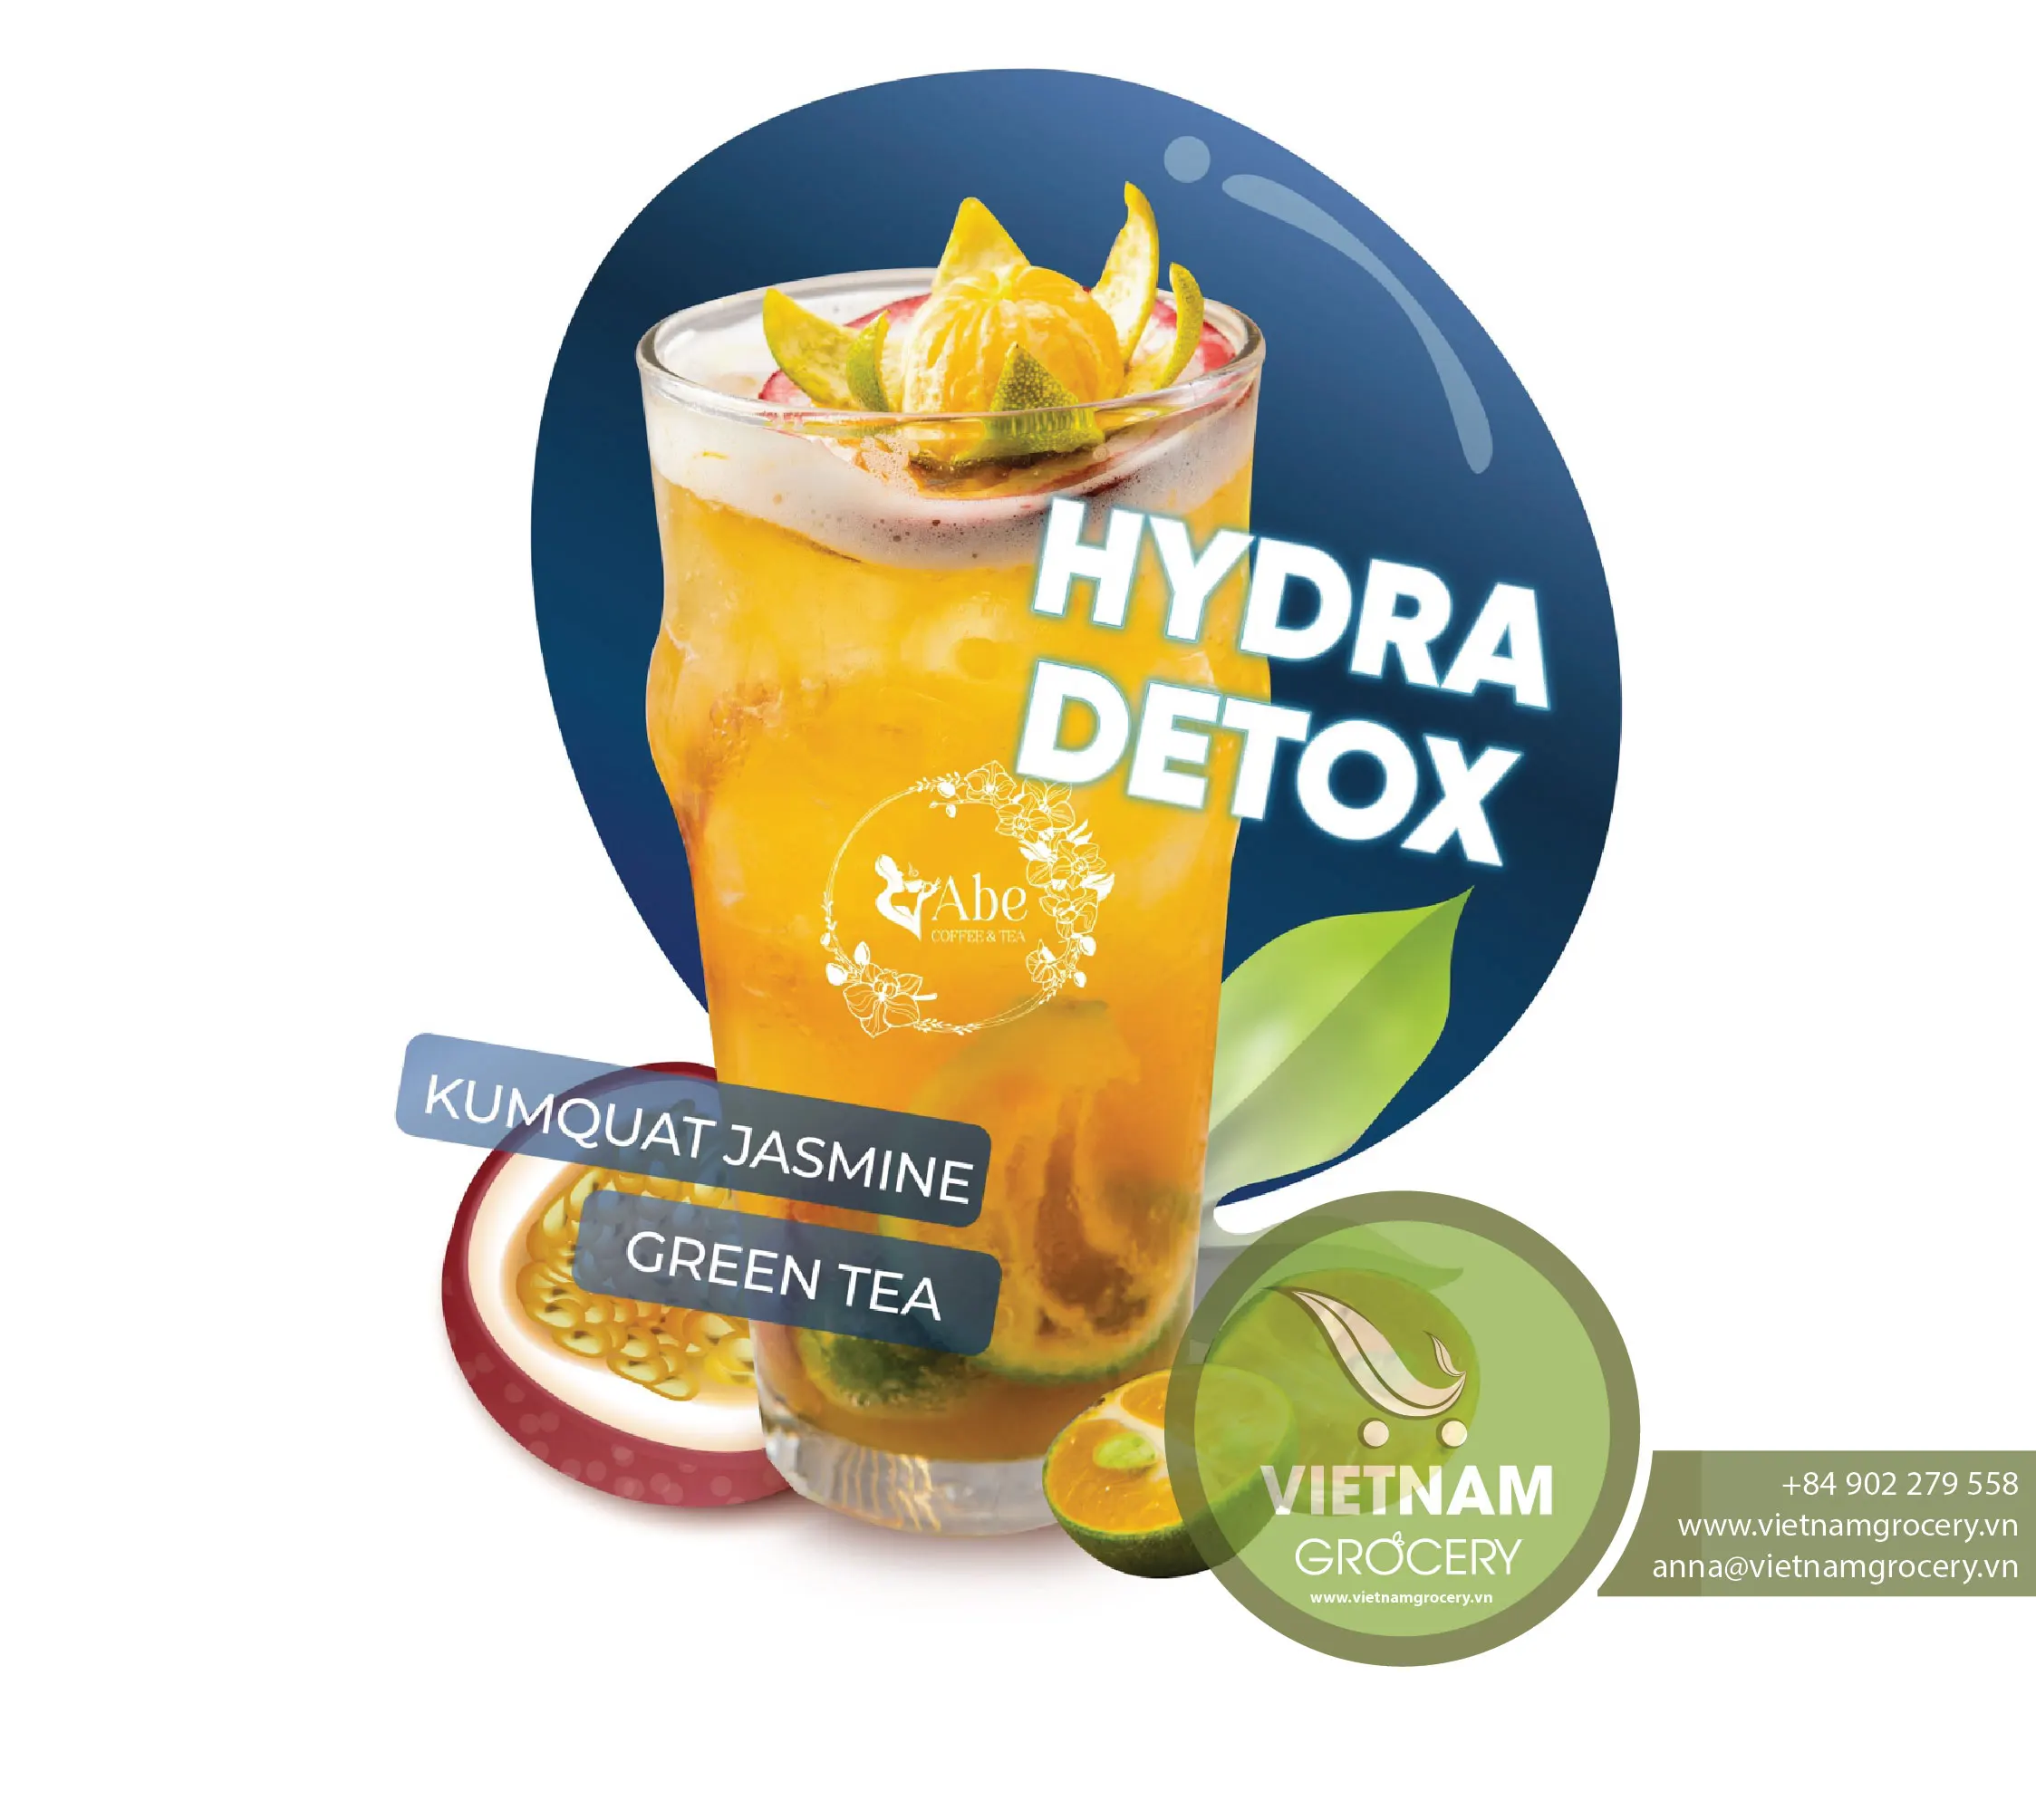 Detox Slim Tea - Hydra Detox Kumquat Jasmine Green Tea